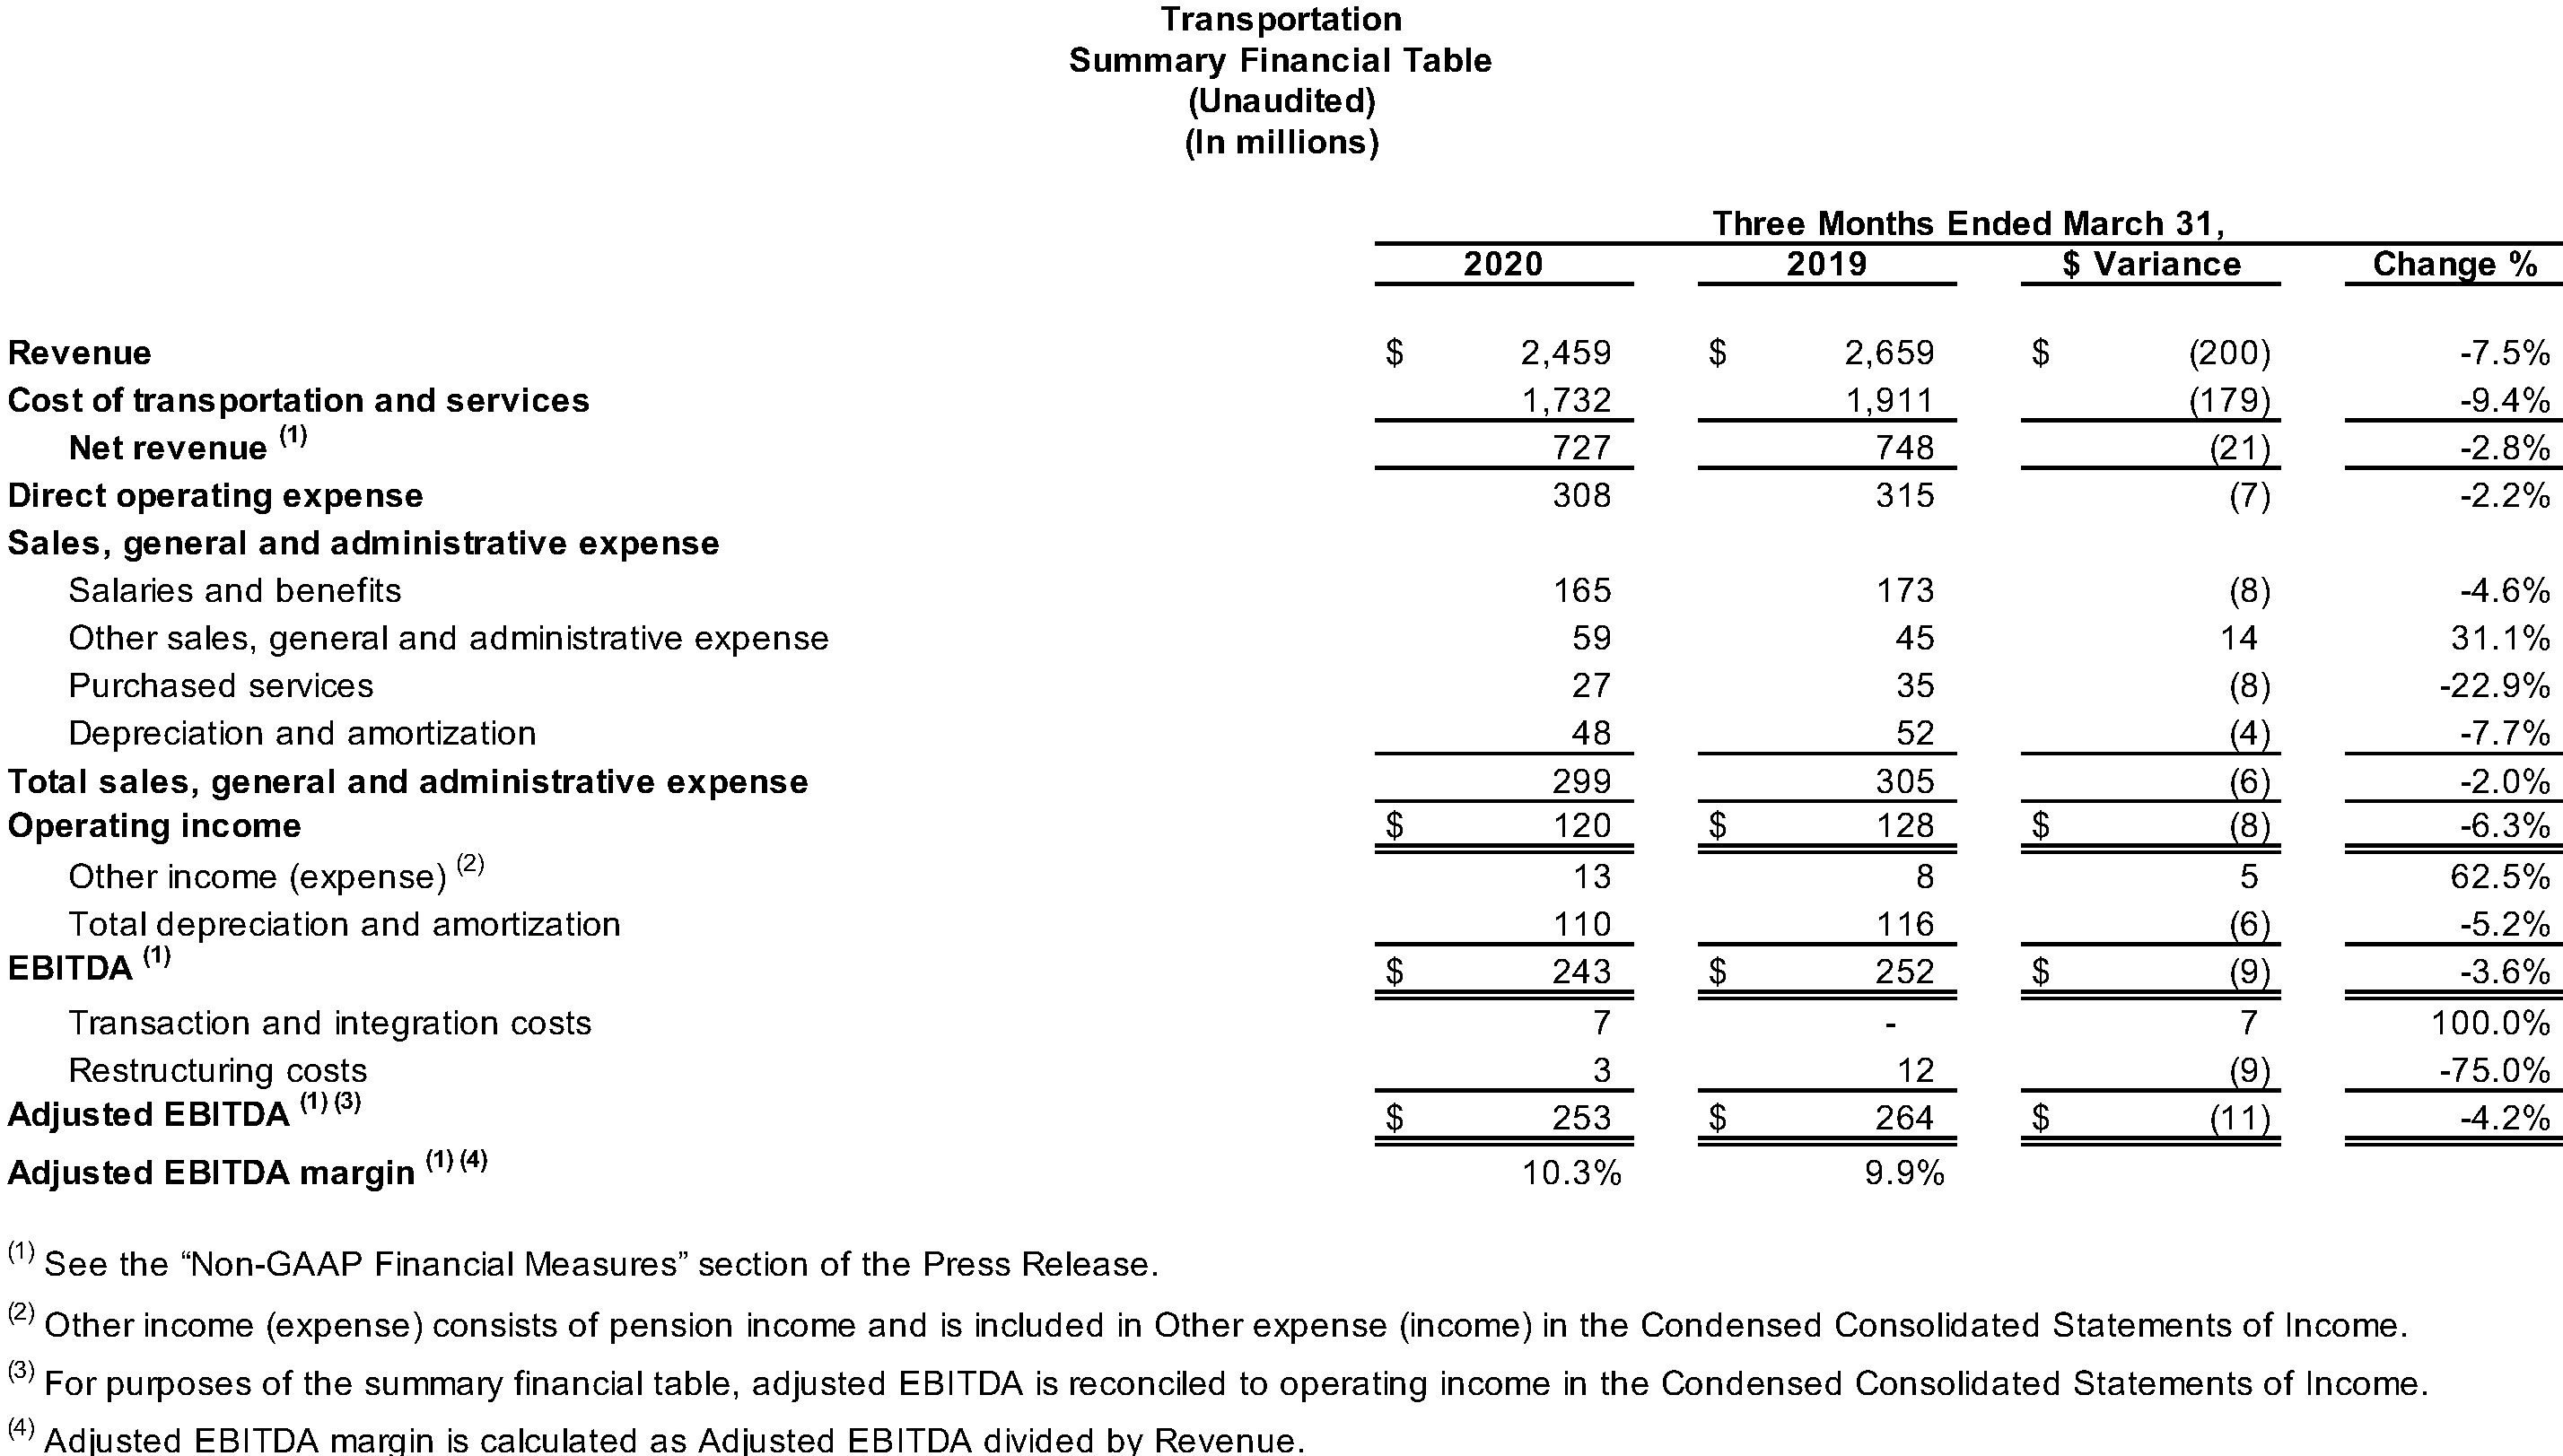 Transportation Summary Financial Table